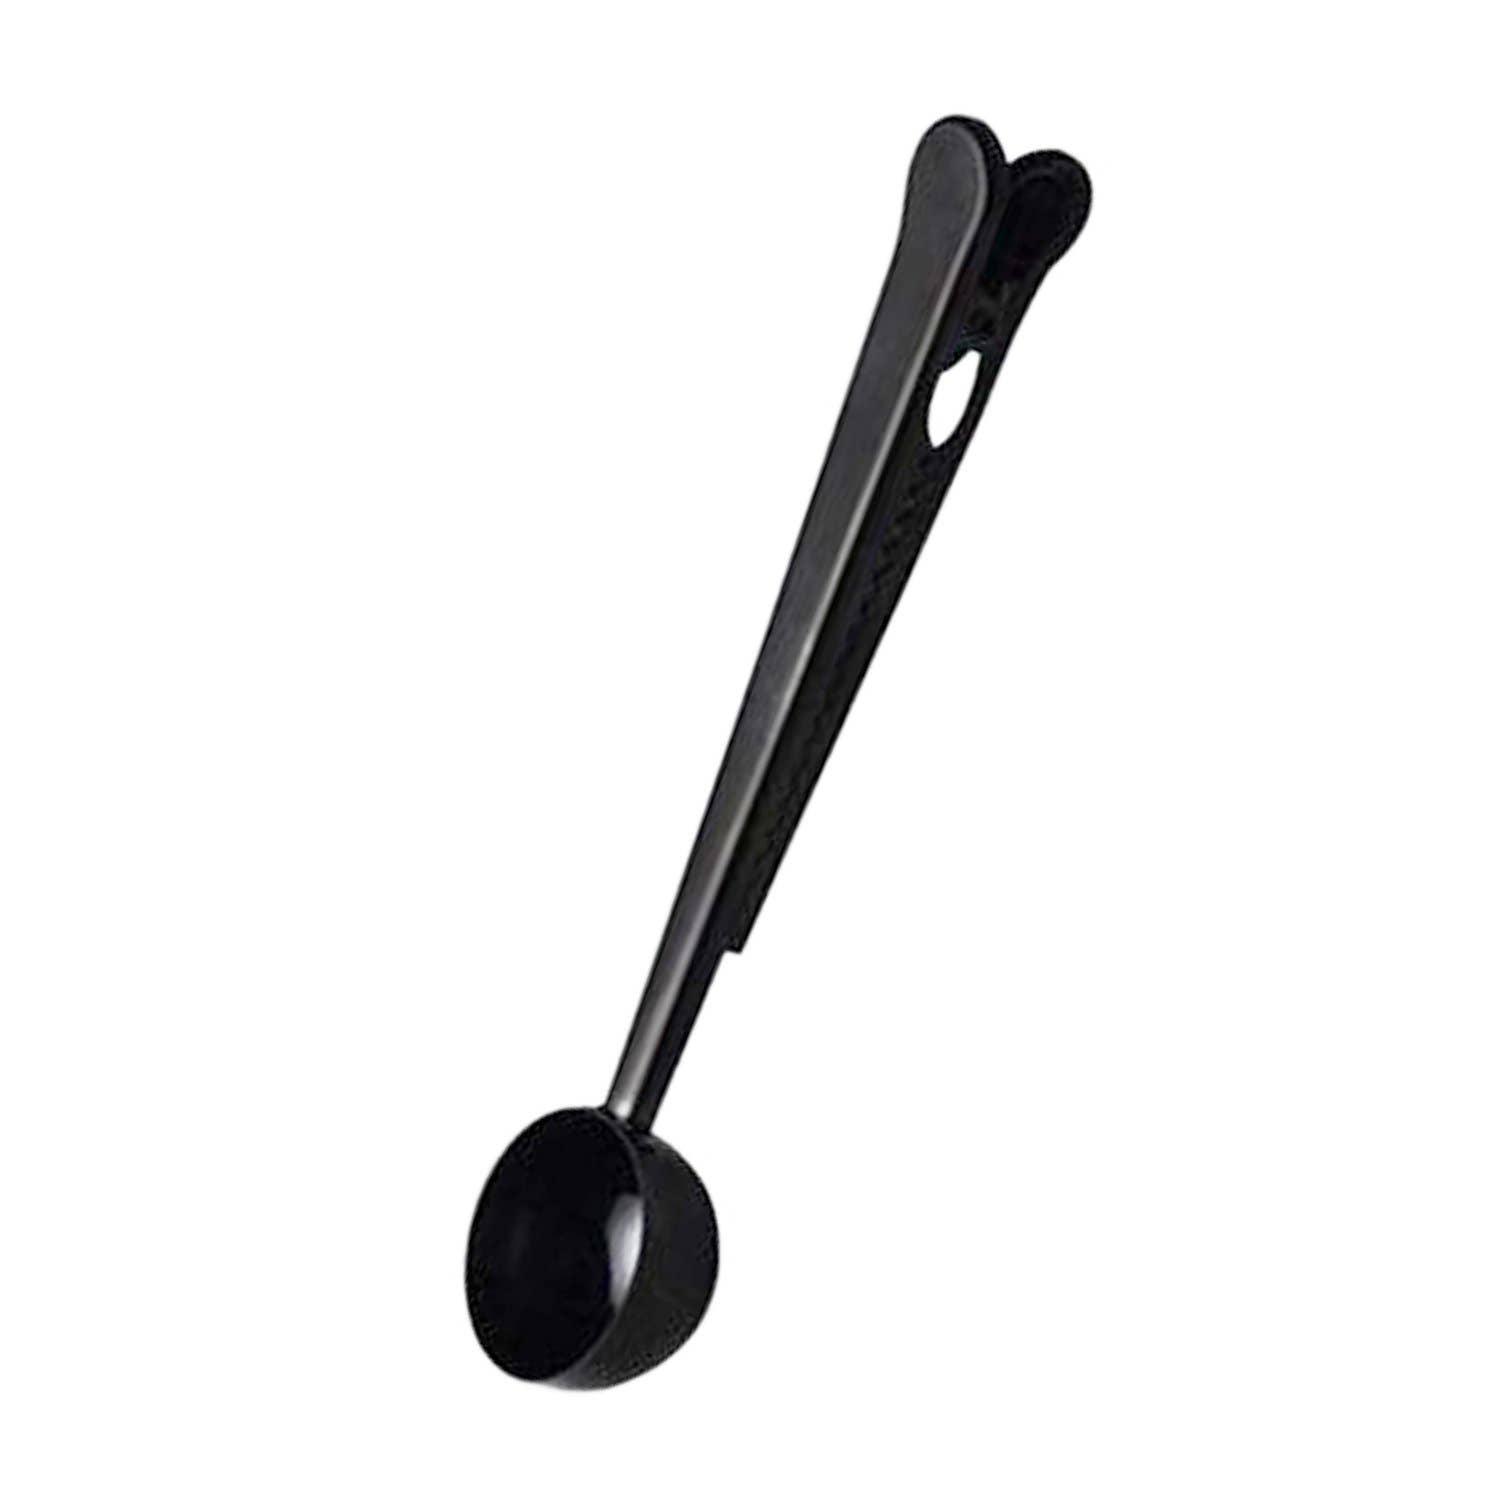 Black 2-1 Coffee Measuring Spoon with Sealing Clip